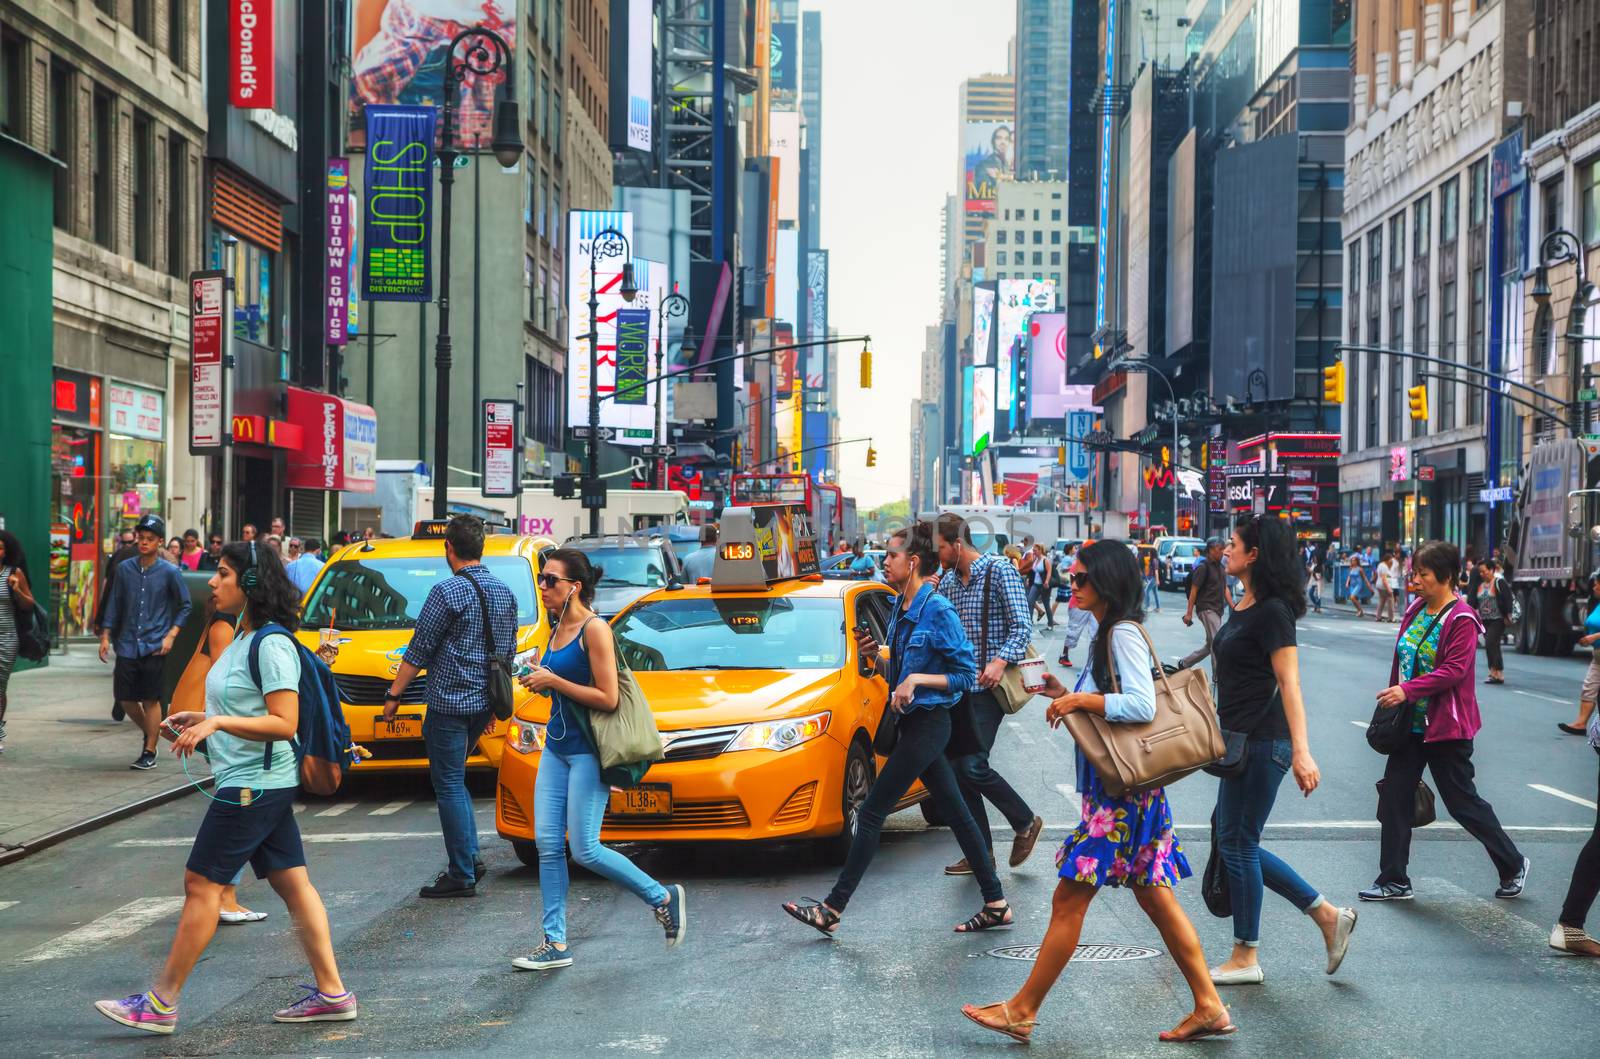 NEW YORK CITY - SEPTEMBER 4: People crossing a street on September 4, 2015 in New York. 